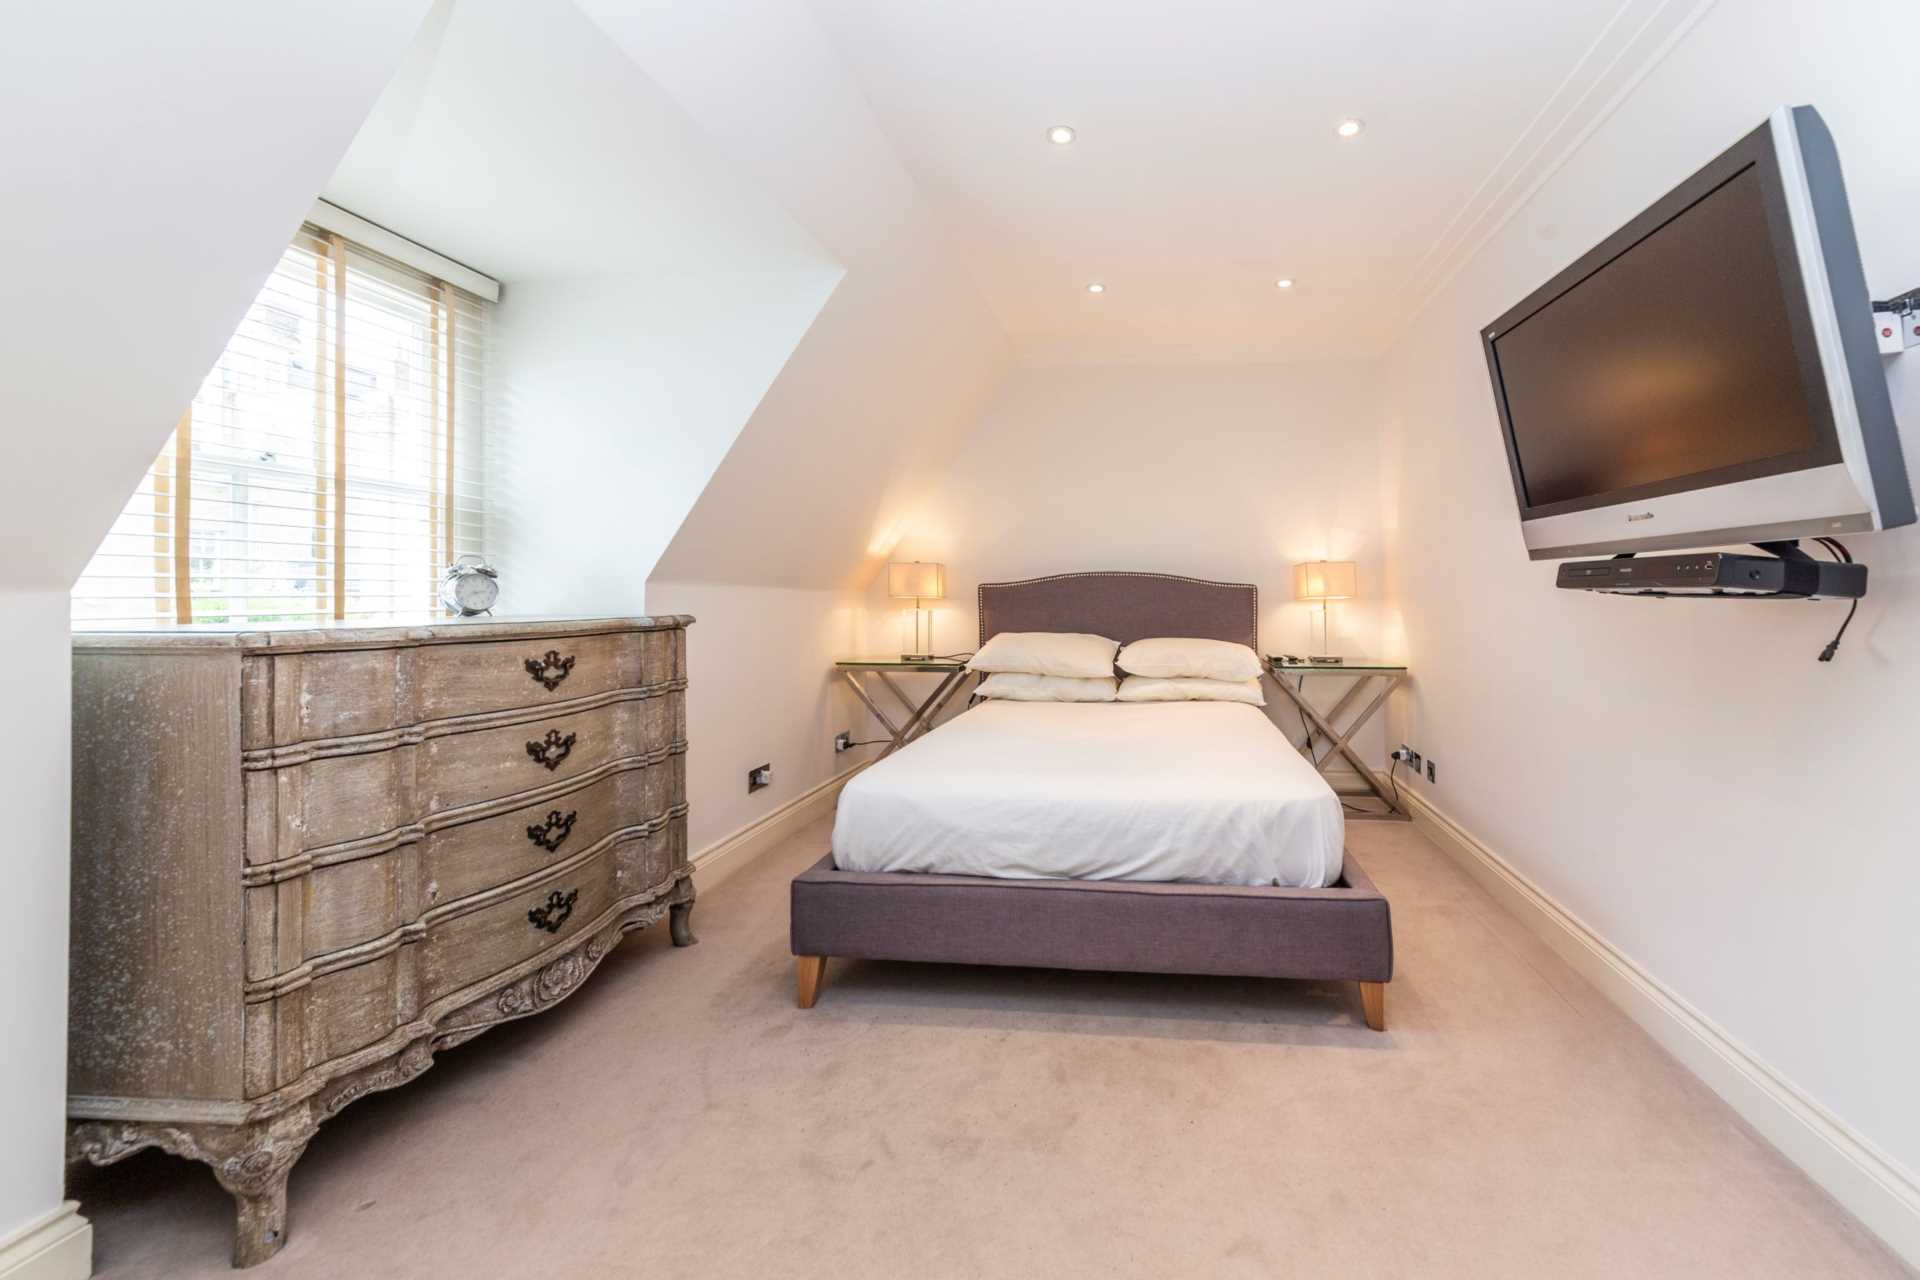 London W1K 3QA 1 bed flat rental property internal/external image-5